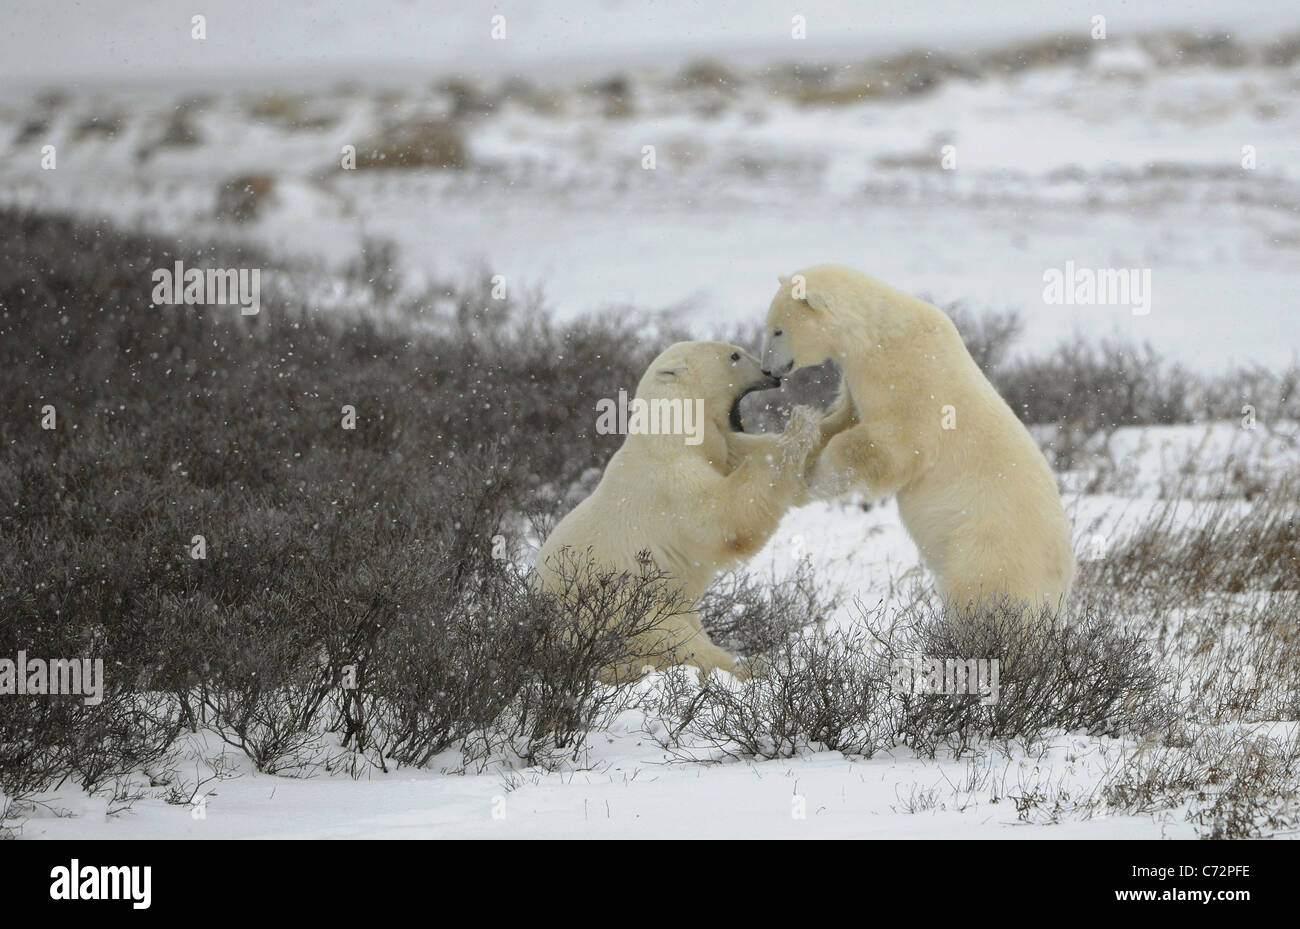 Two fighting polar bears. Tundra with undersized vegetation. Snow. Stock Photo